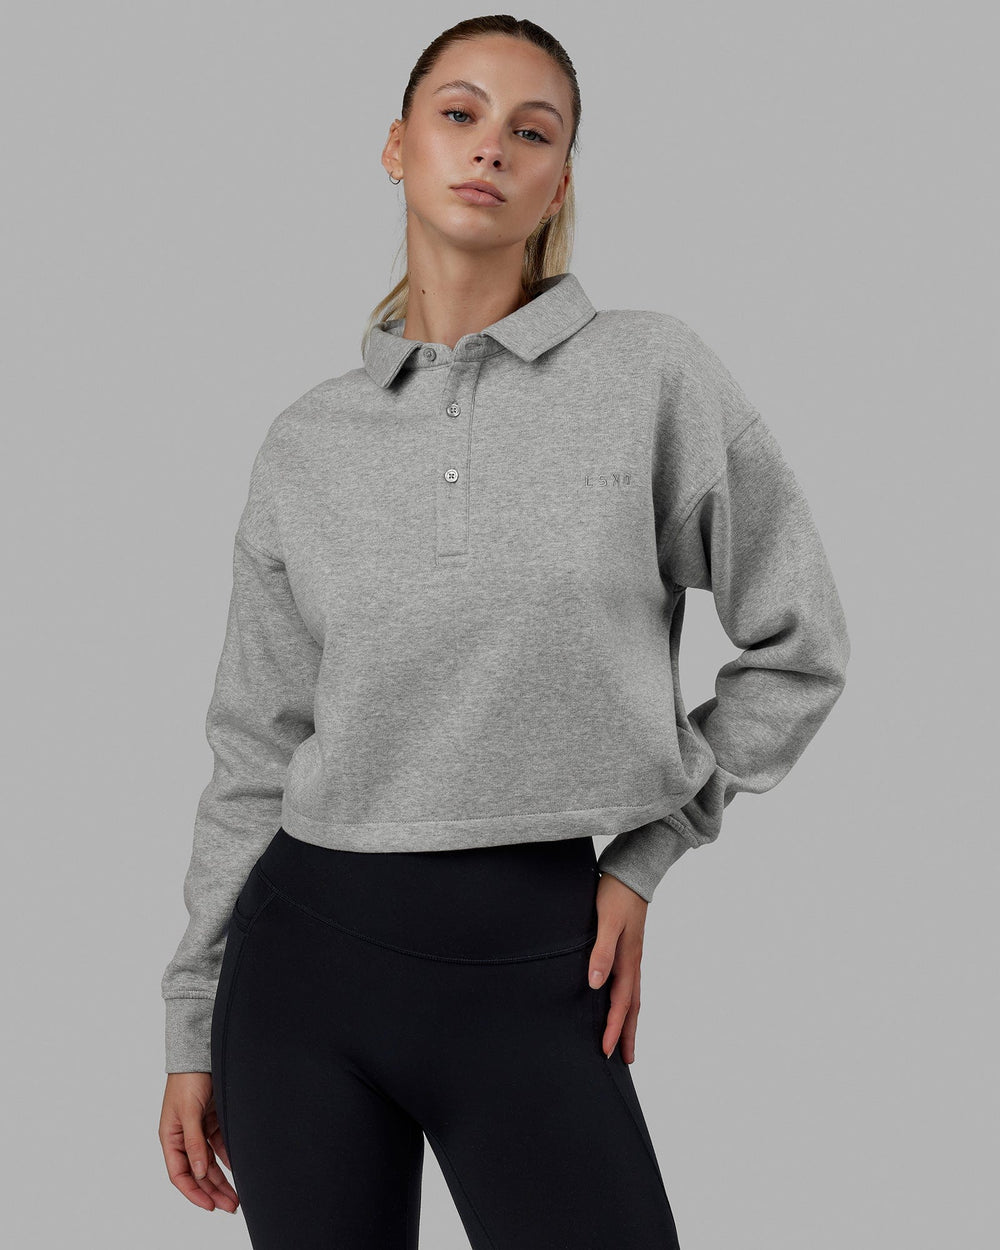 Woman wearing Off Court Sweater - Grey Marl